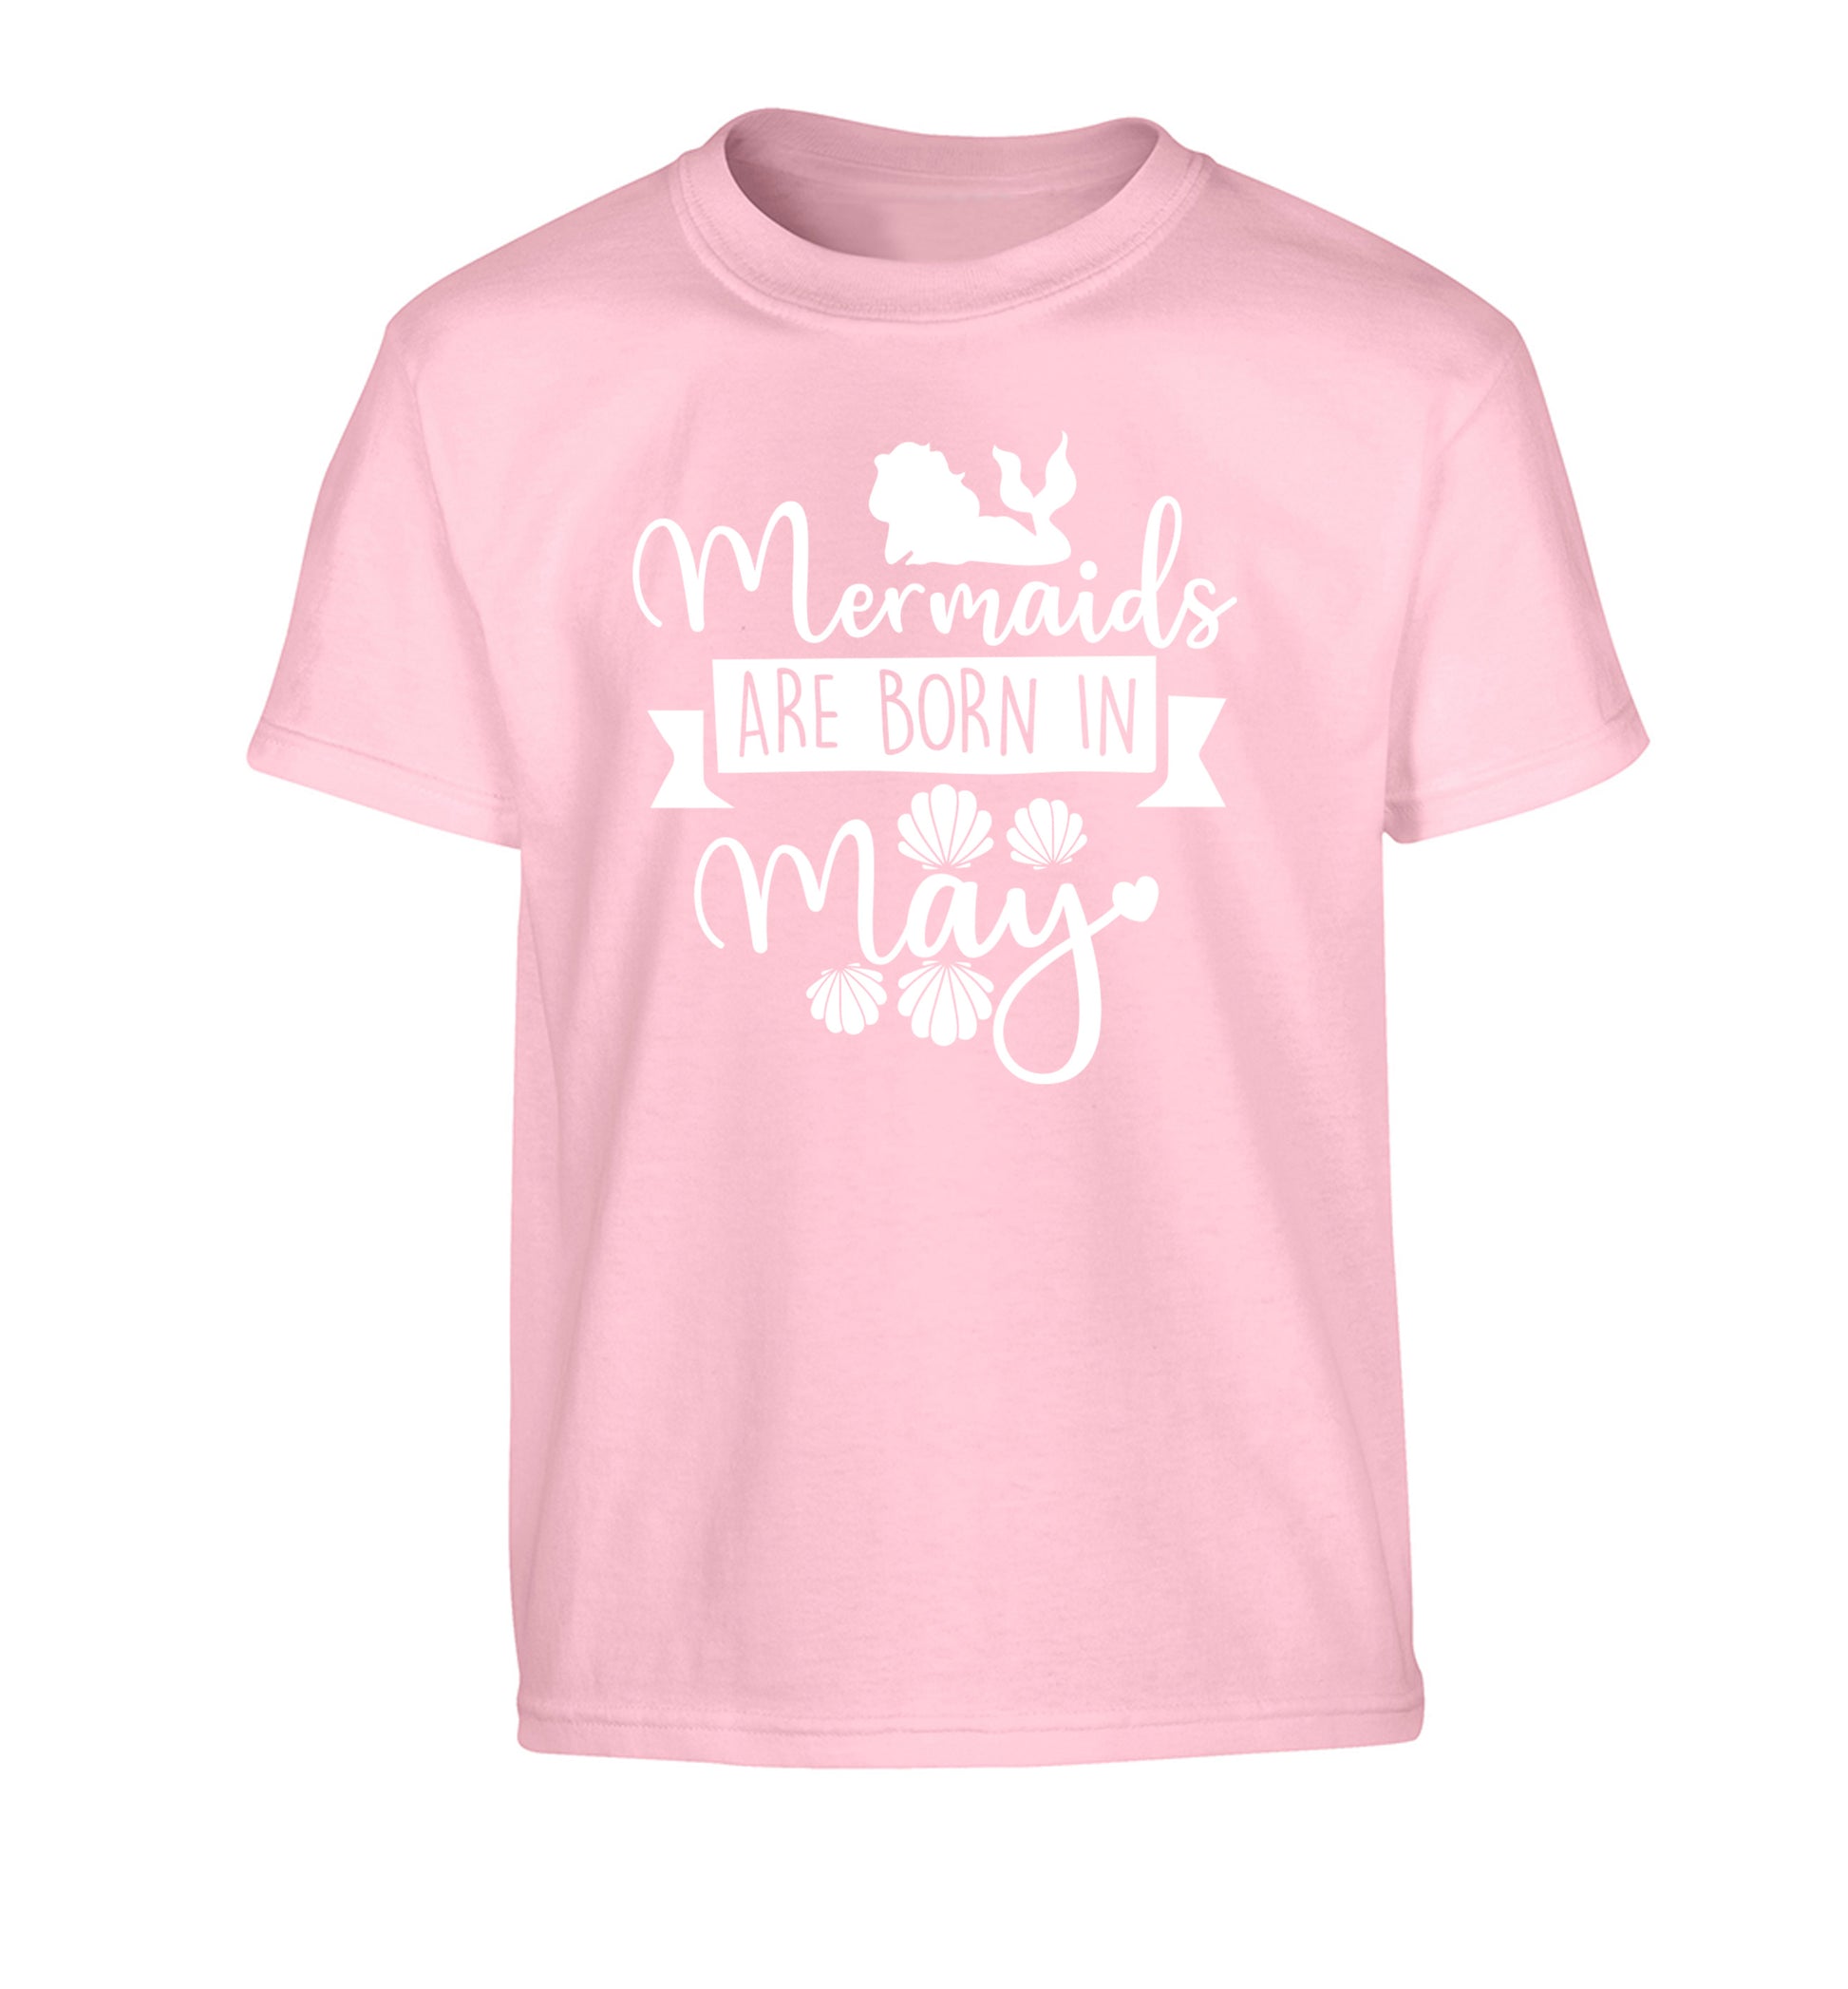 Mermaids are born in May Children's light pink Tshirt 12-13 Years